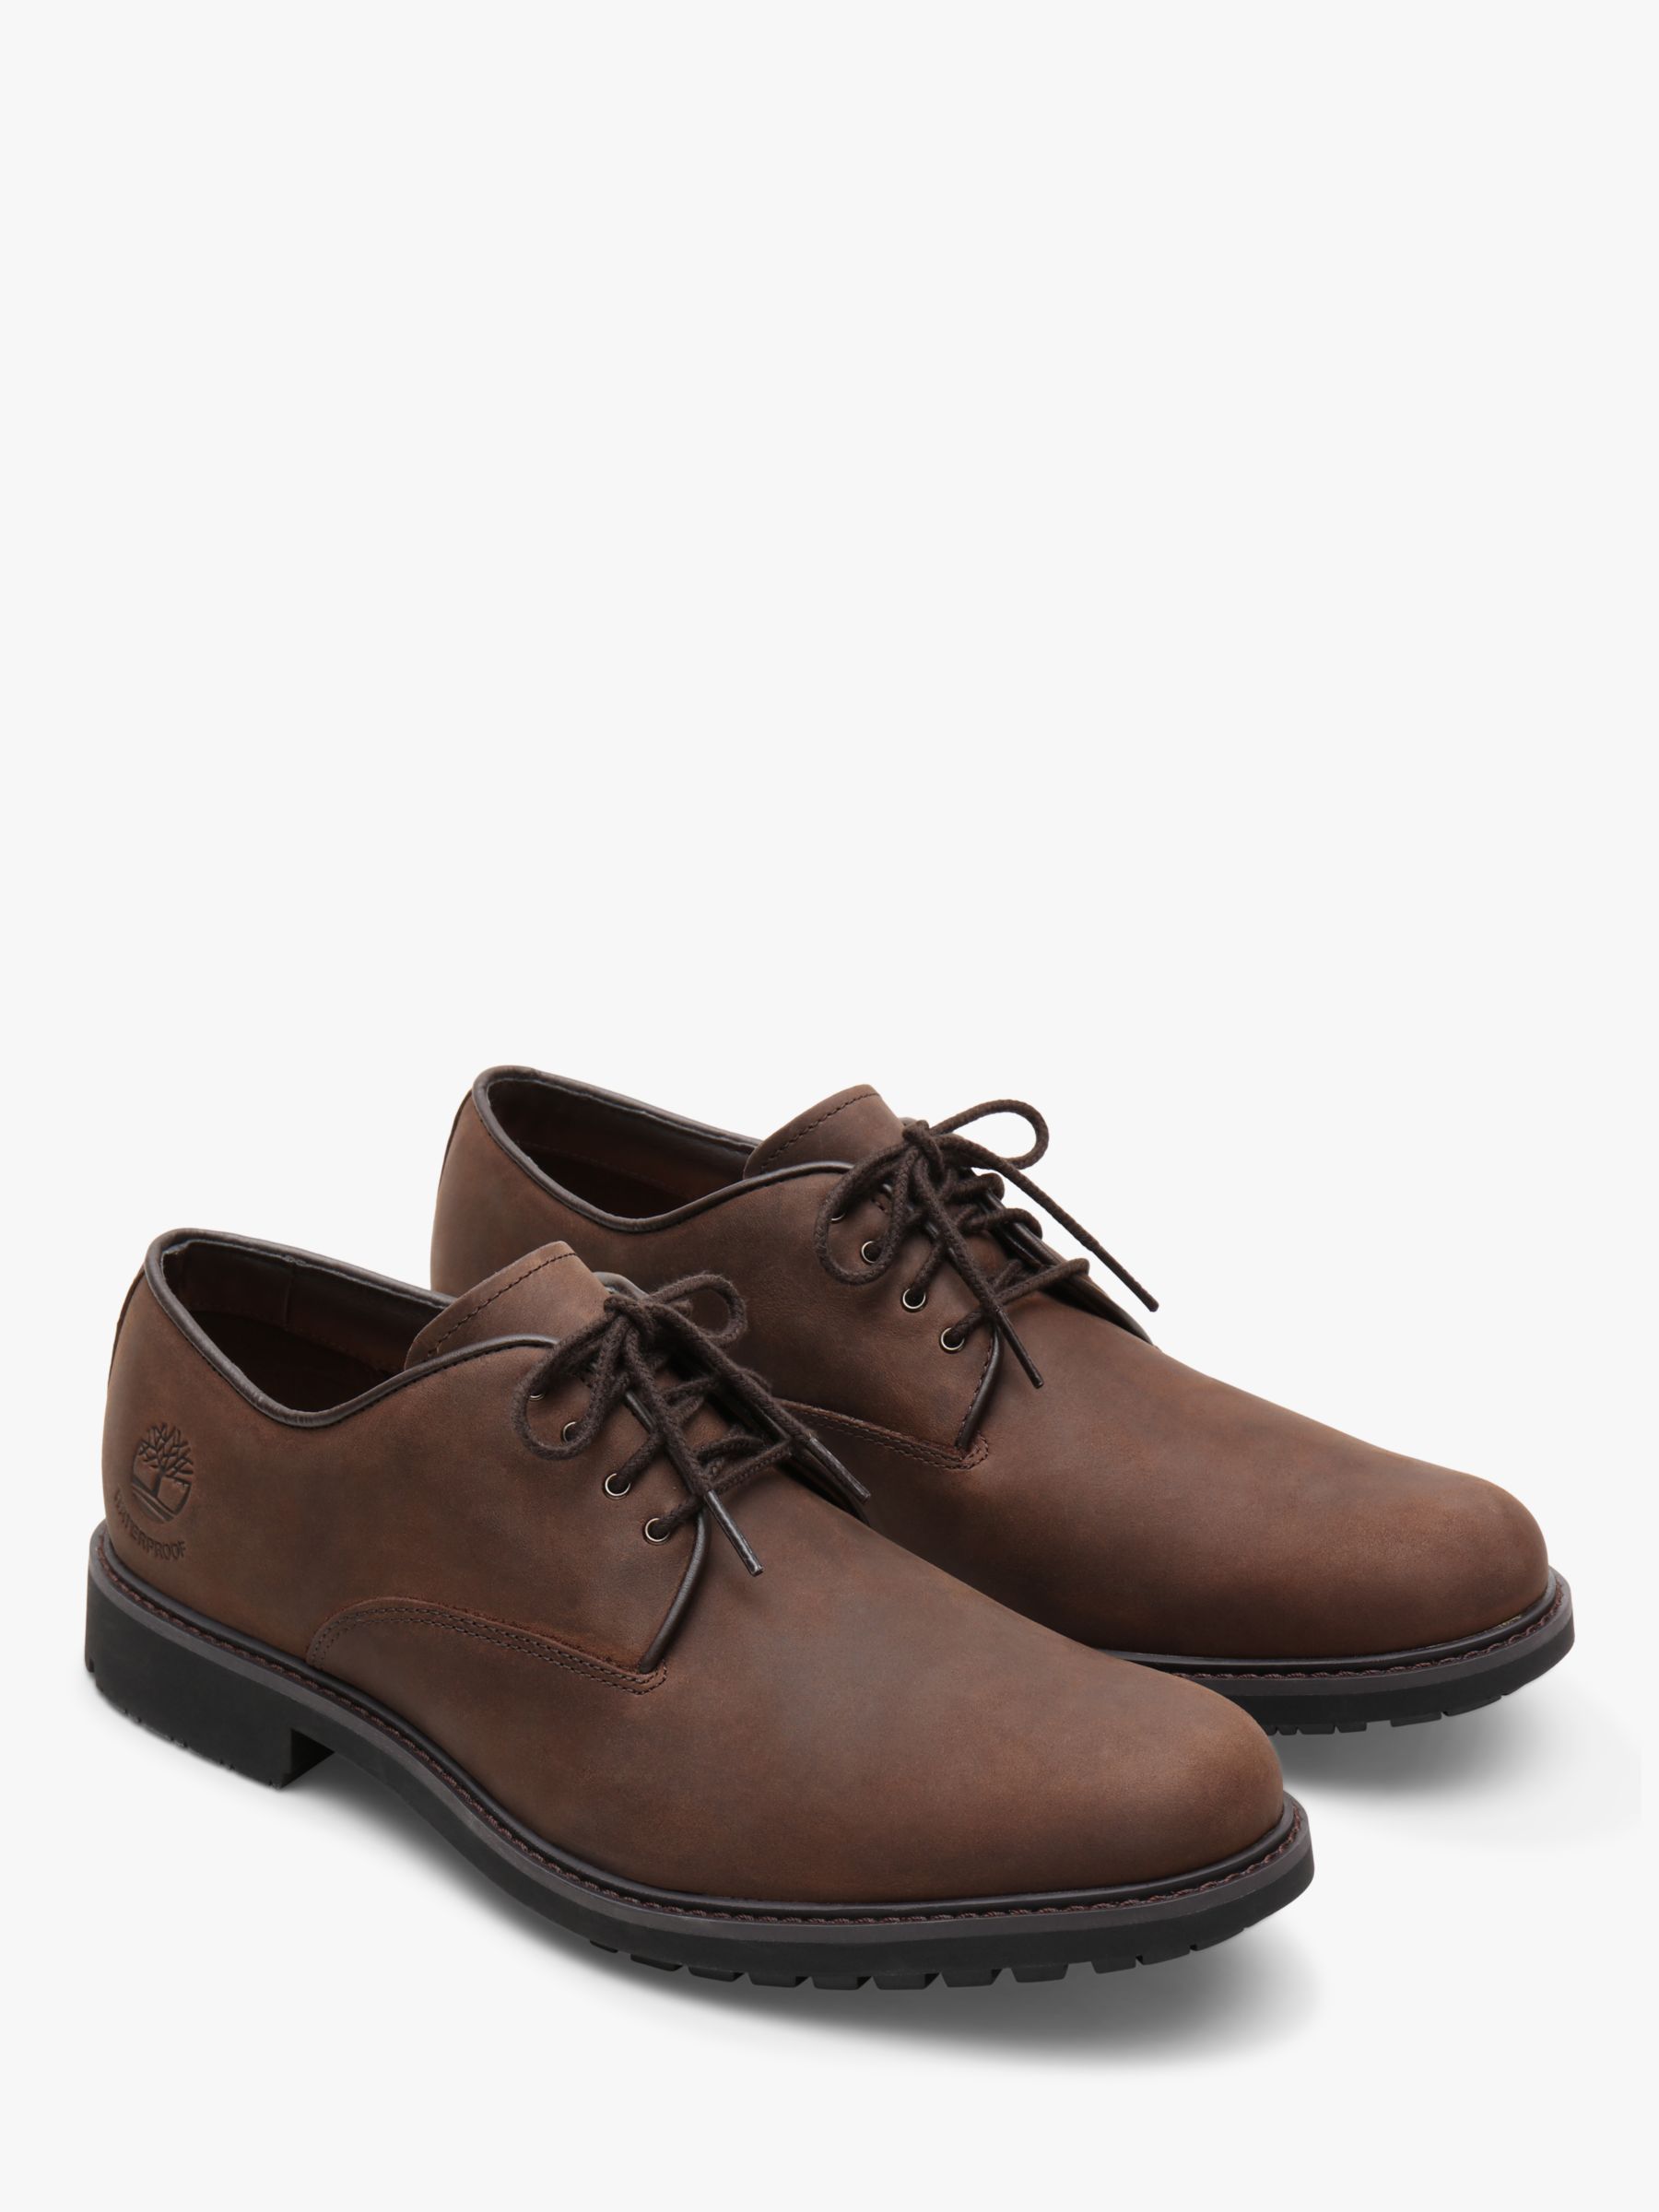 Timberland Stormbuck Plain Toe Oxford Shoes, Dark Brown at John Lewis & Partners